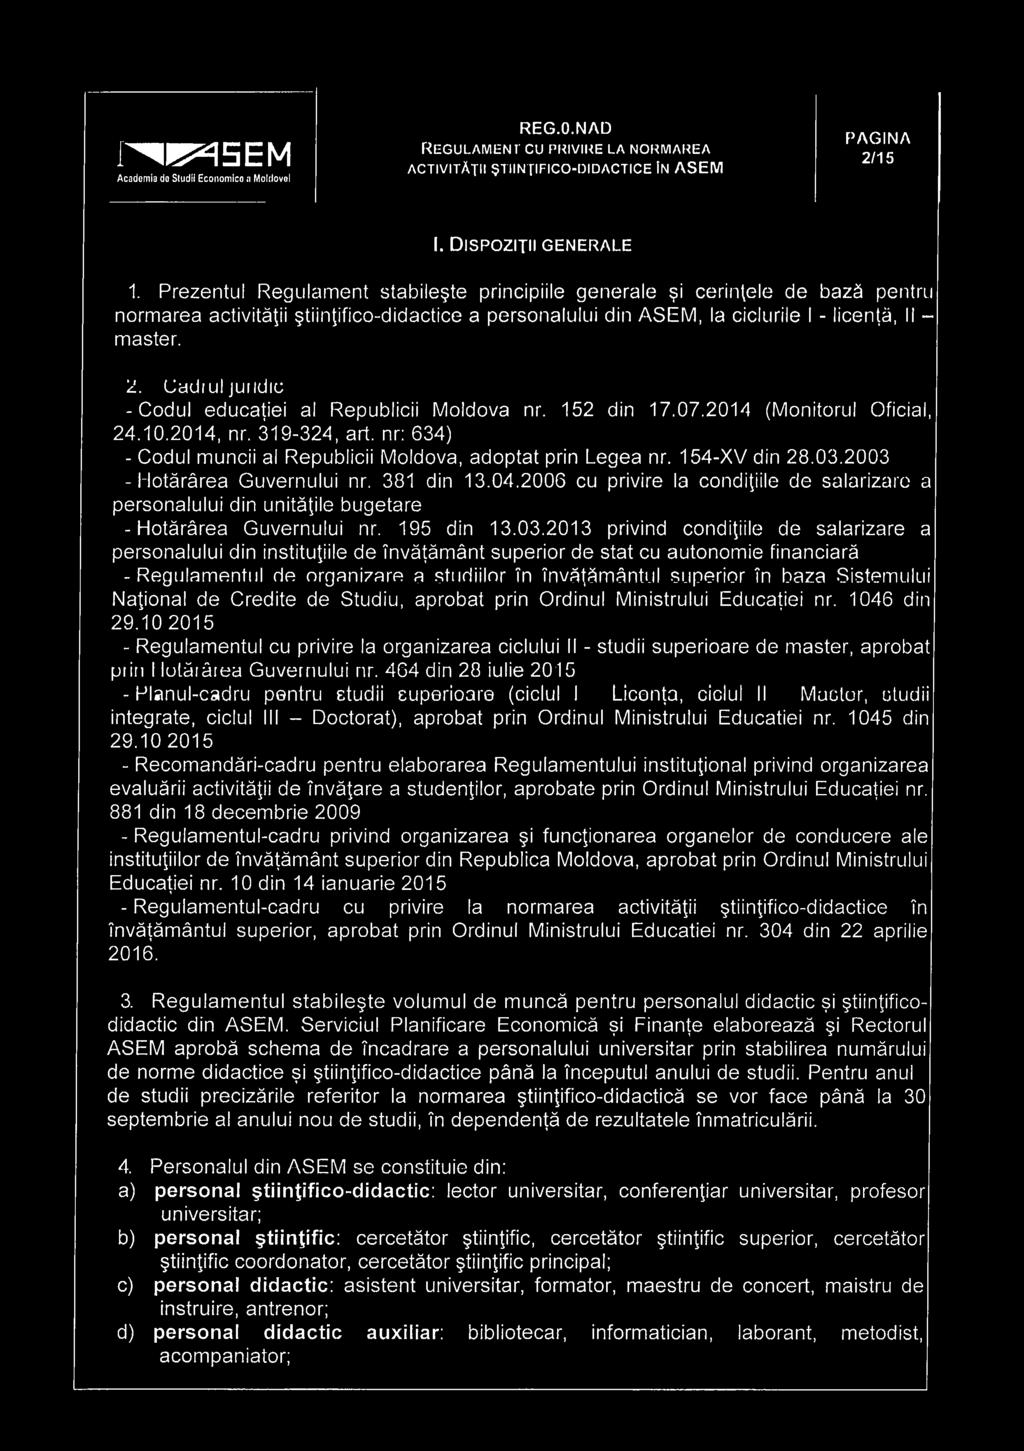 Uadiul juiidic -Codul educaţiei al Republicii Moldova nr. 152 din 17.07.2014 (Monitorul Oficial, 24.10.2014, nr. 319-324, art. nr: 634) - Codul muncii al Republicii Moldova, adoptat prin Legea nr.